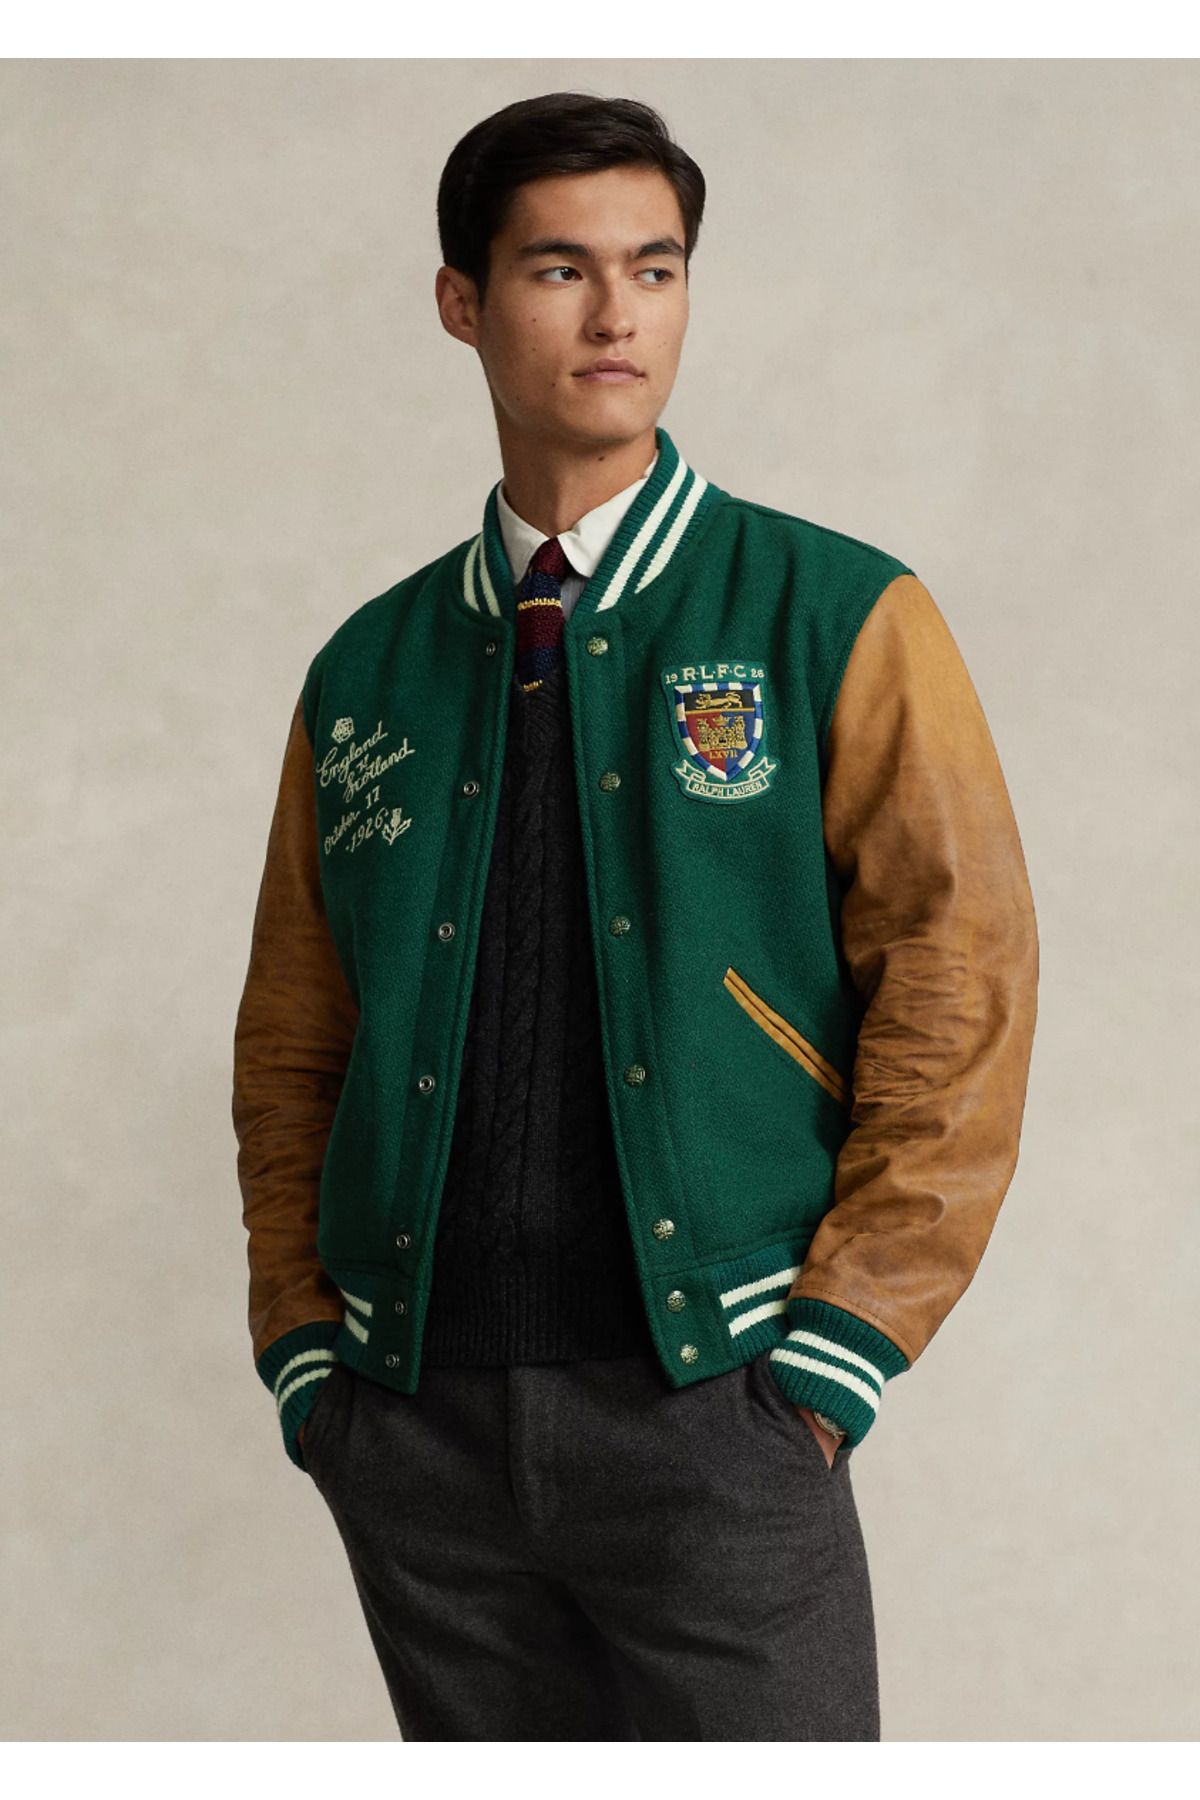 Ralph Lauren Varsity-Inspired Jacket